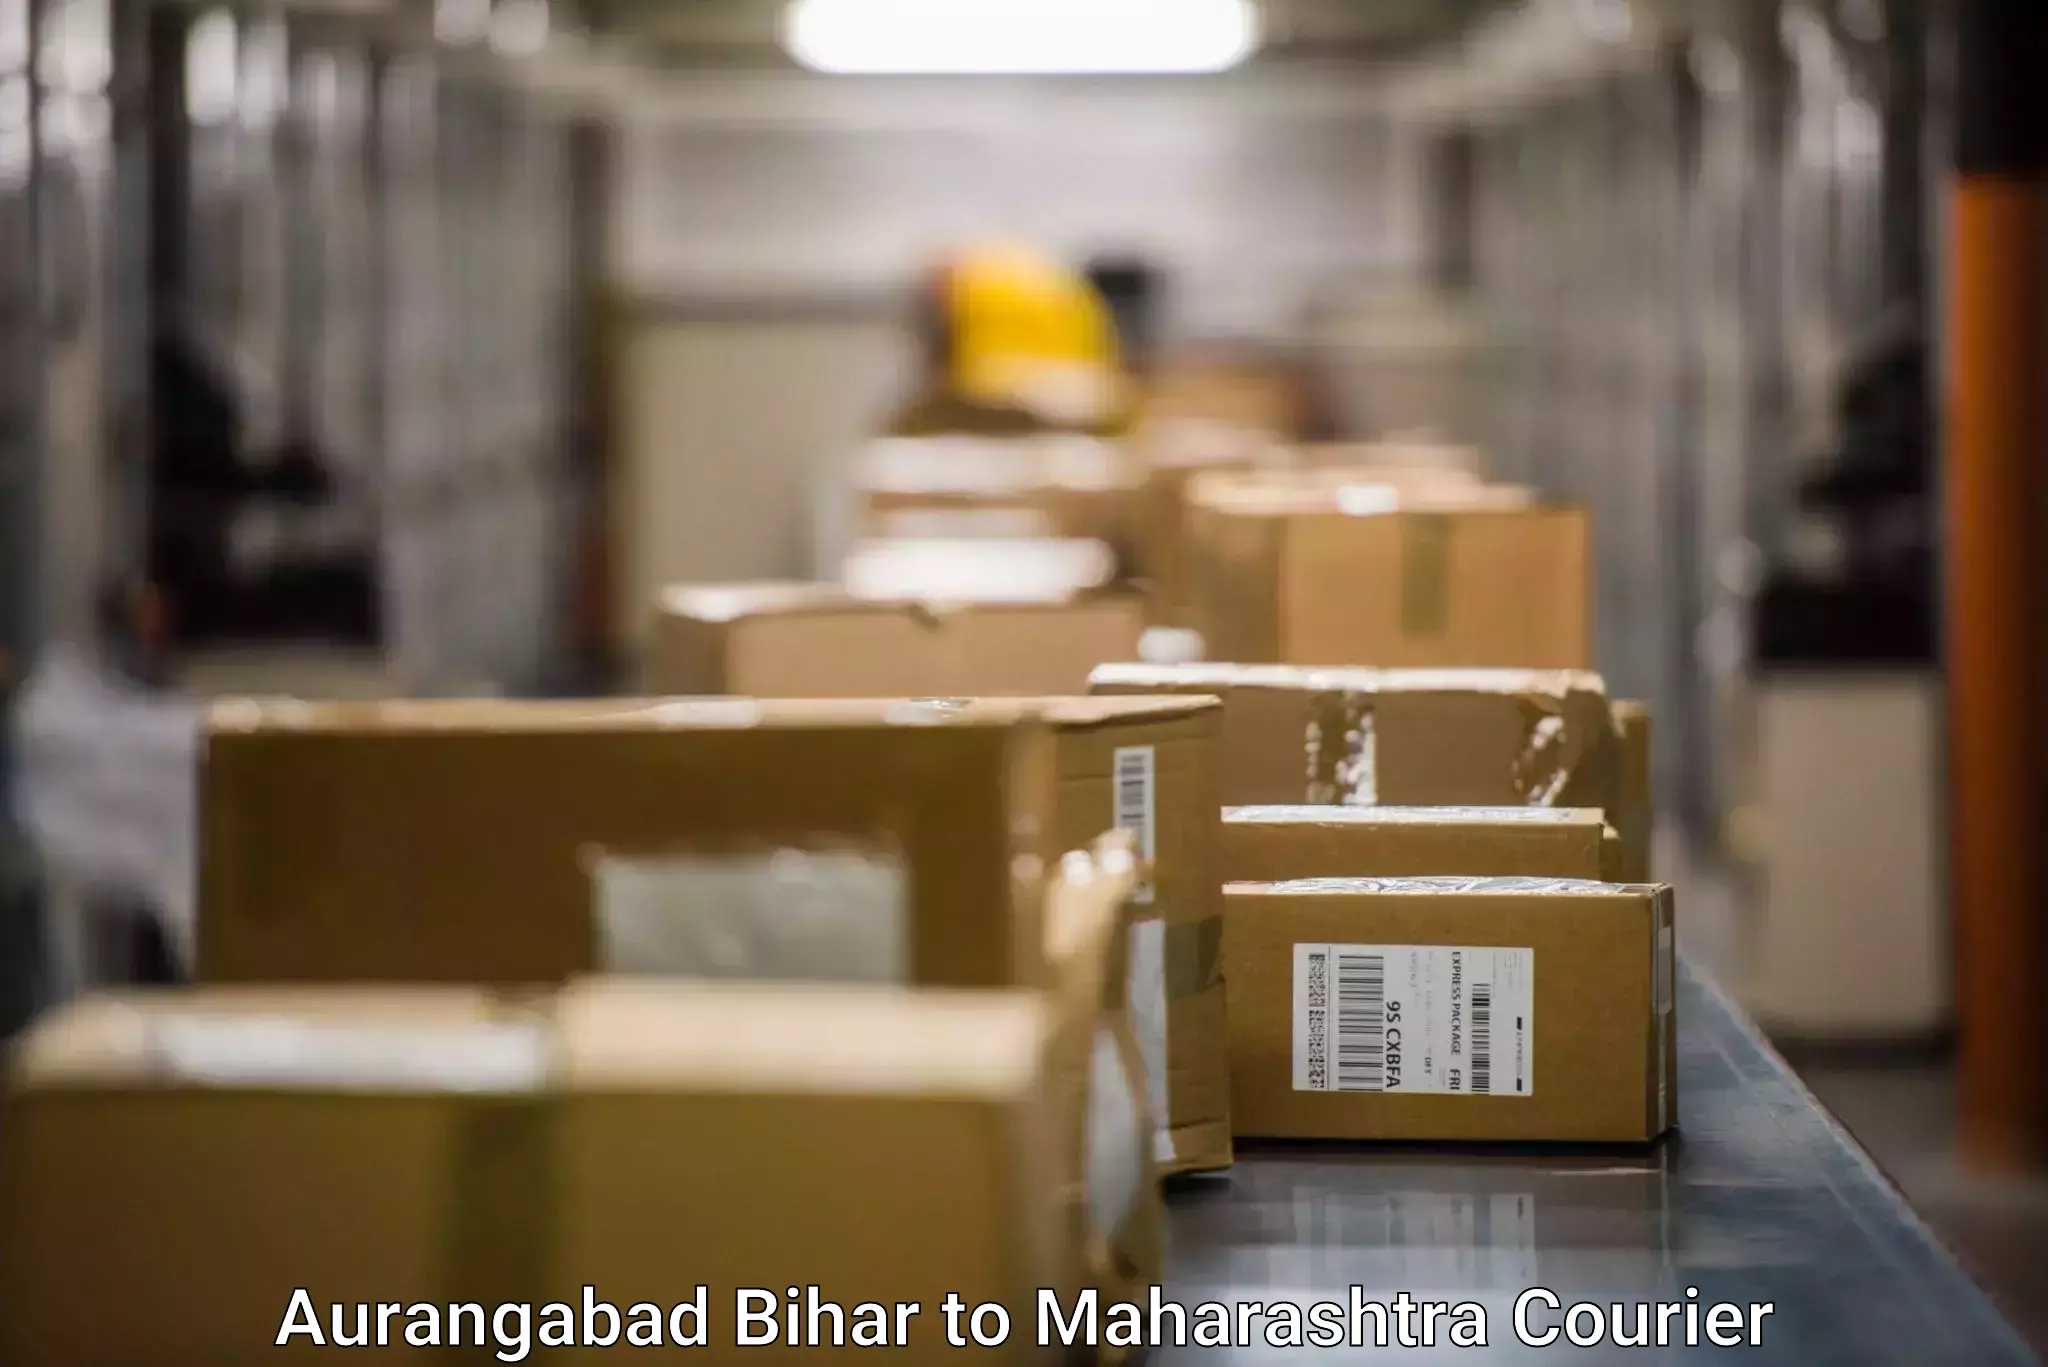 Premium courier solutions Aurangabad Bihar to Jawaharlal Nehru Port Nhava Sheva